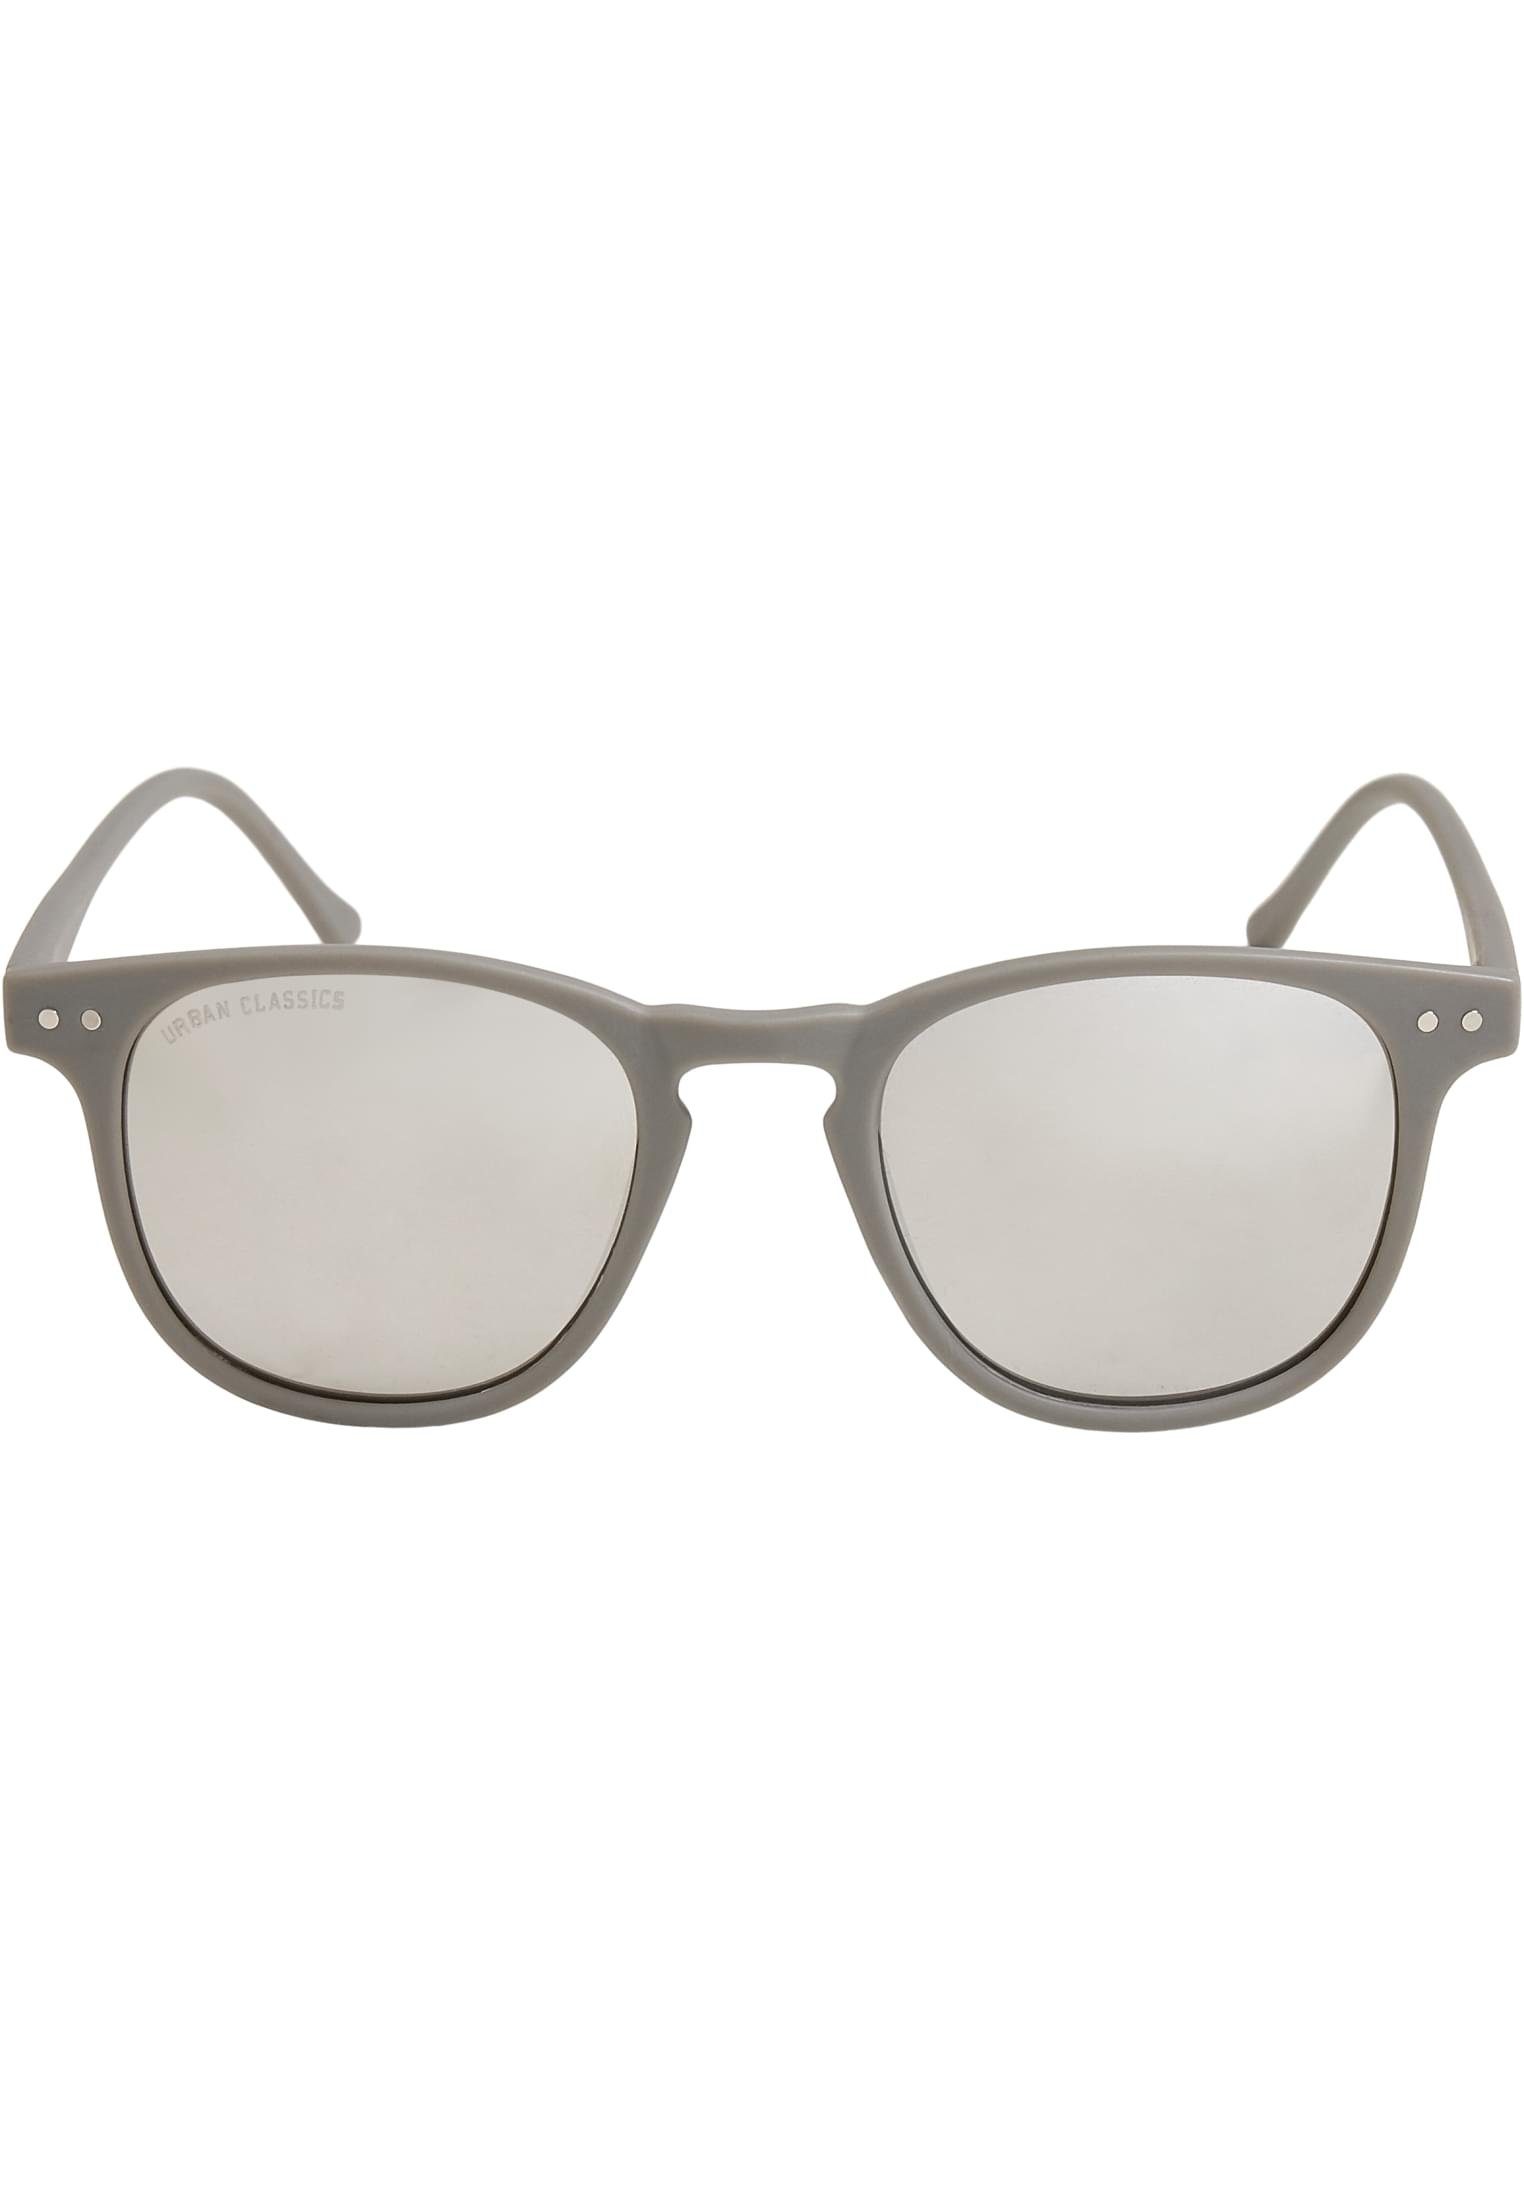 Chain URBAN Sonnenbrille Arthur grey/silver with Sunglasses Unisex CLASSICS